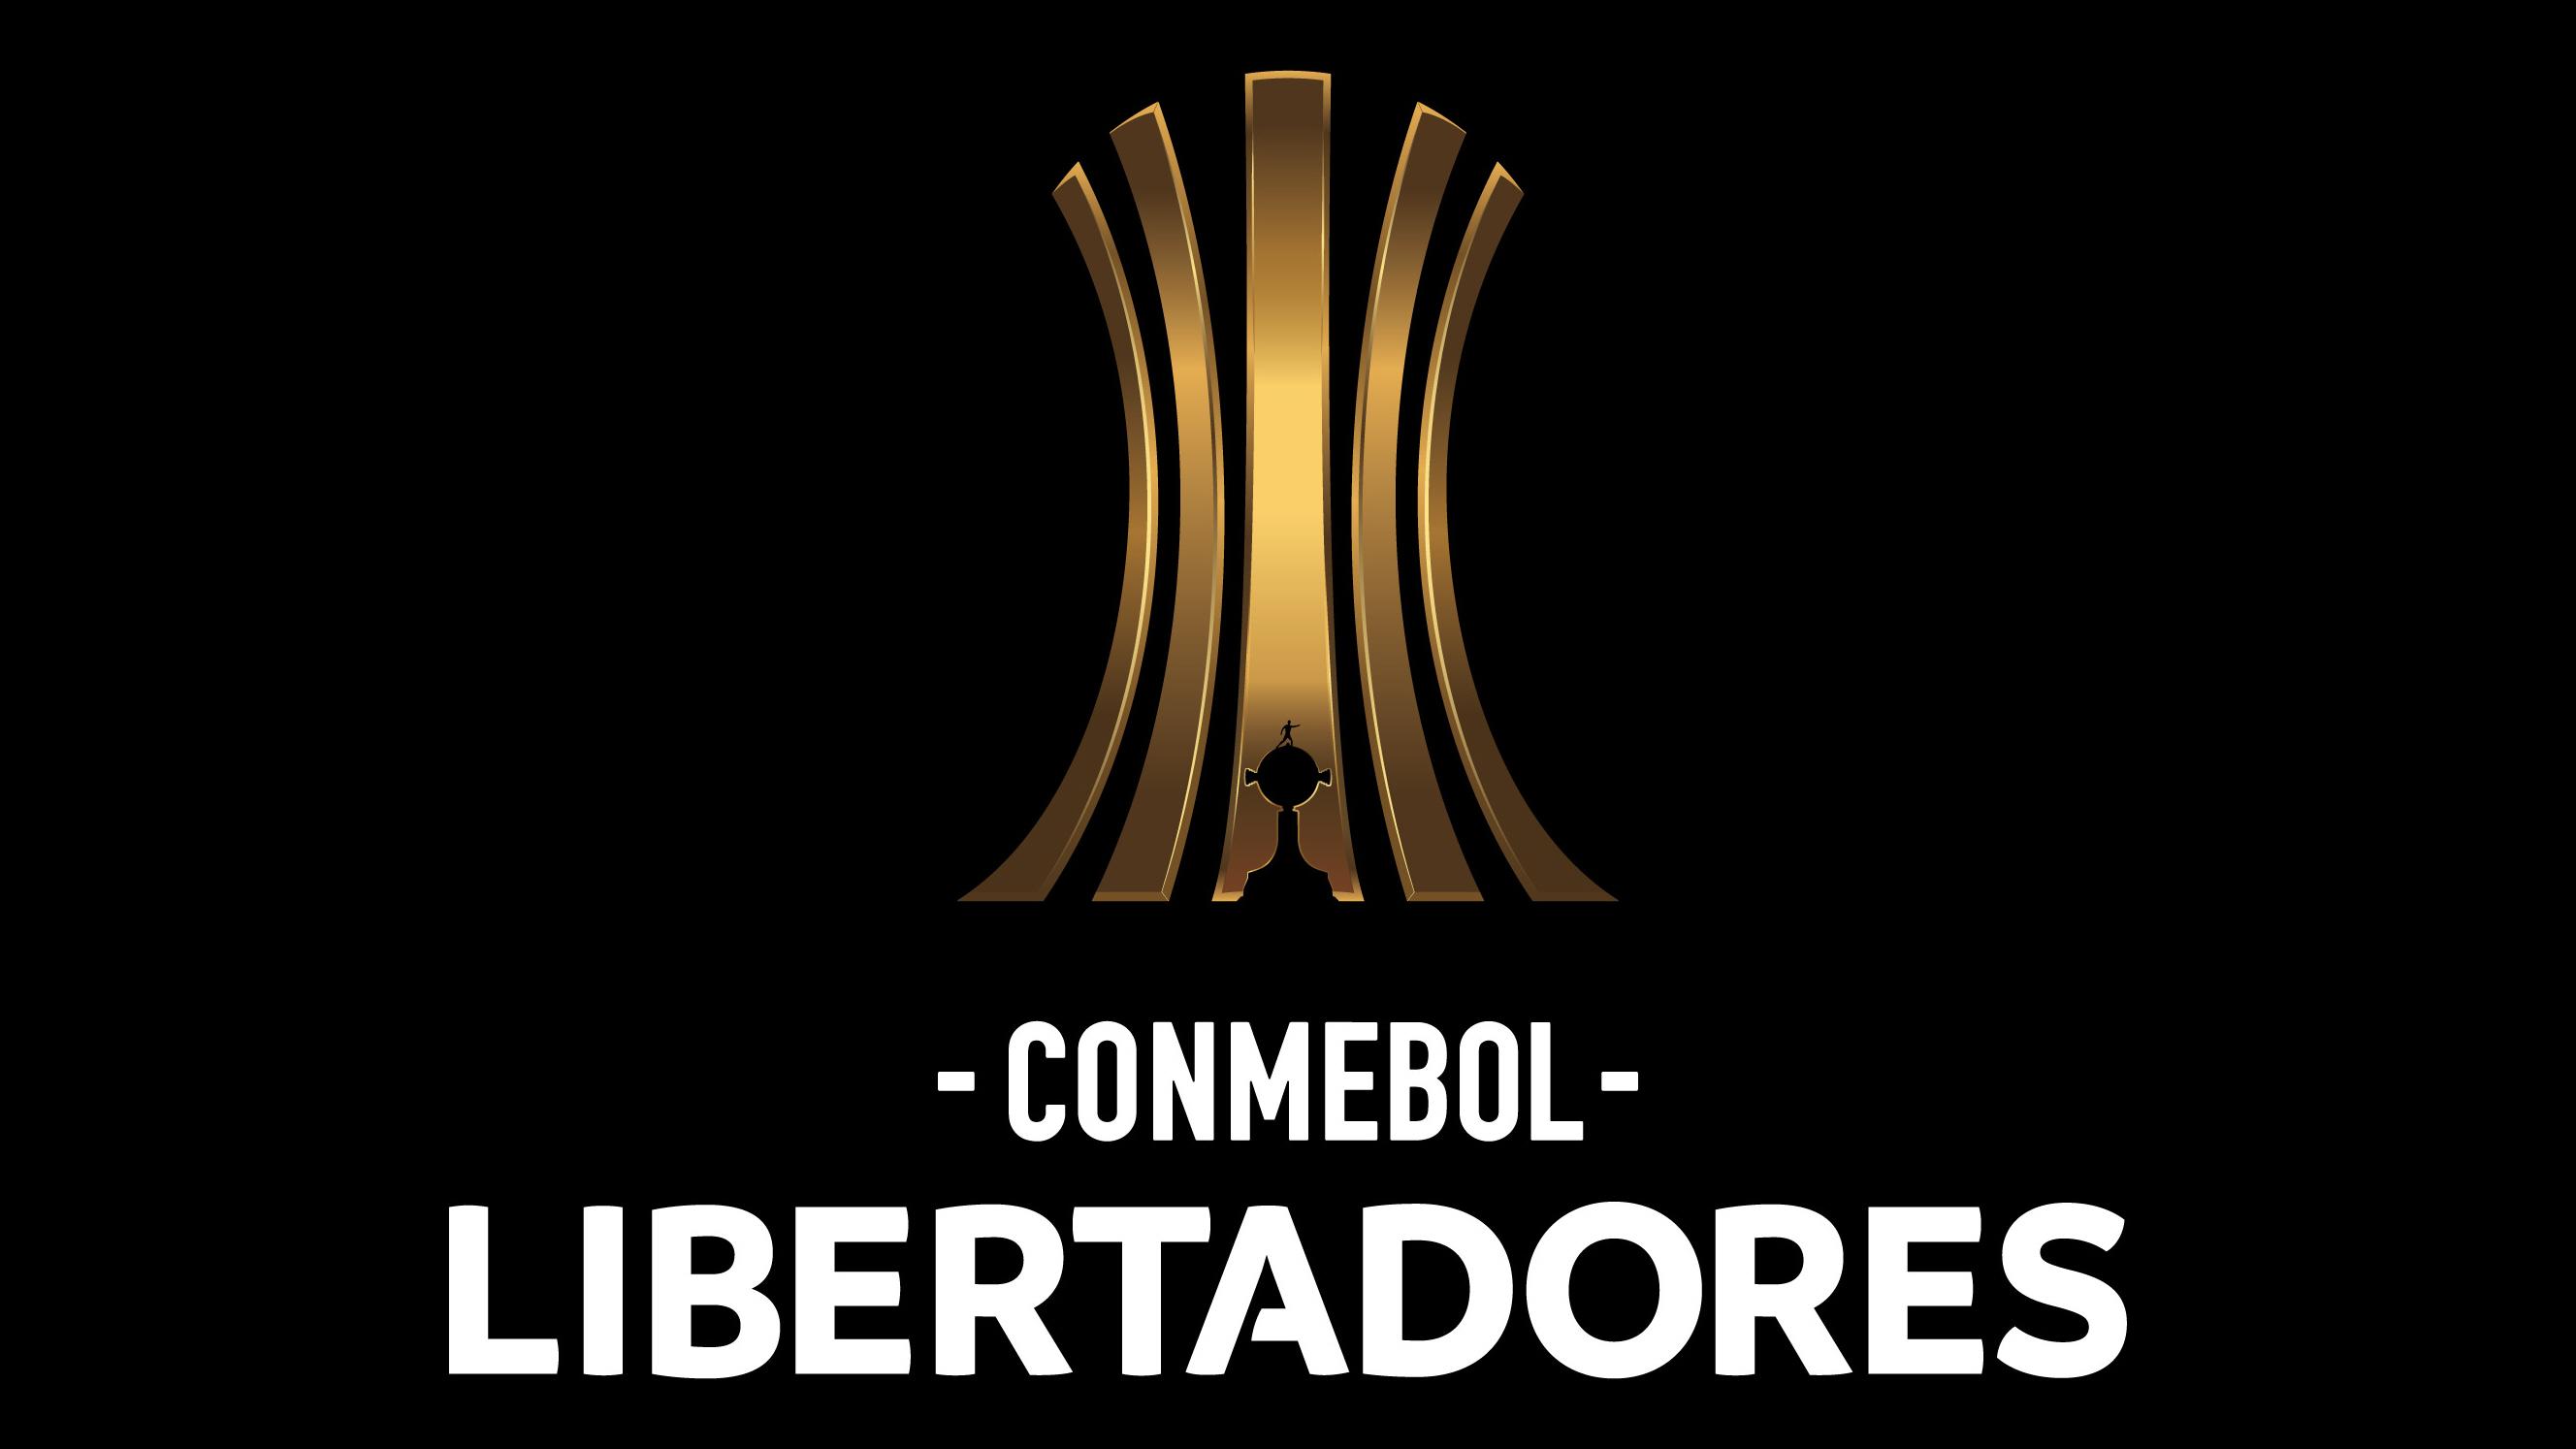 Stream And Watch Copa Libertadores Soccer Online | Sling TV